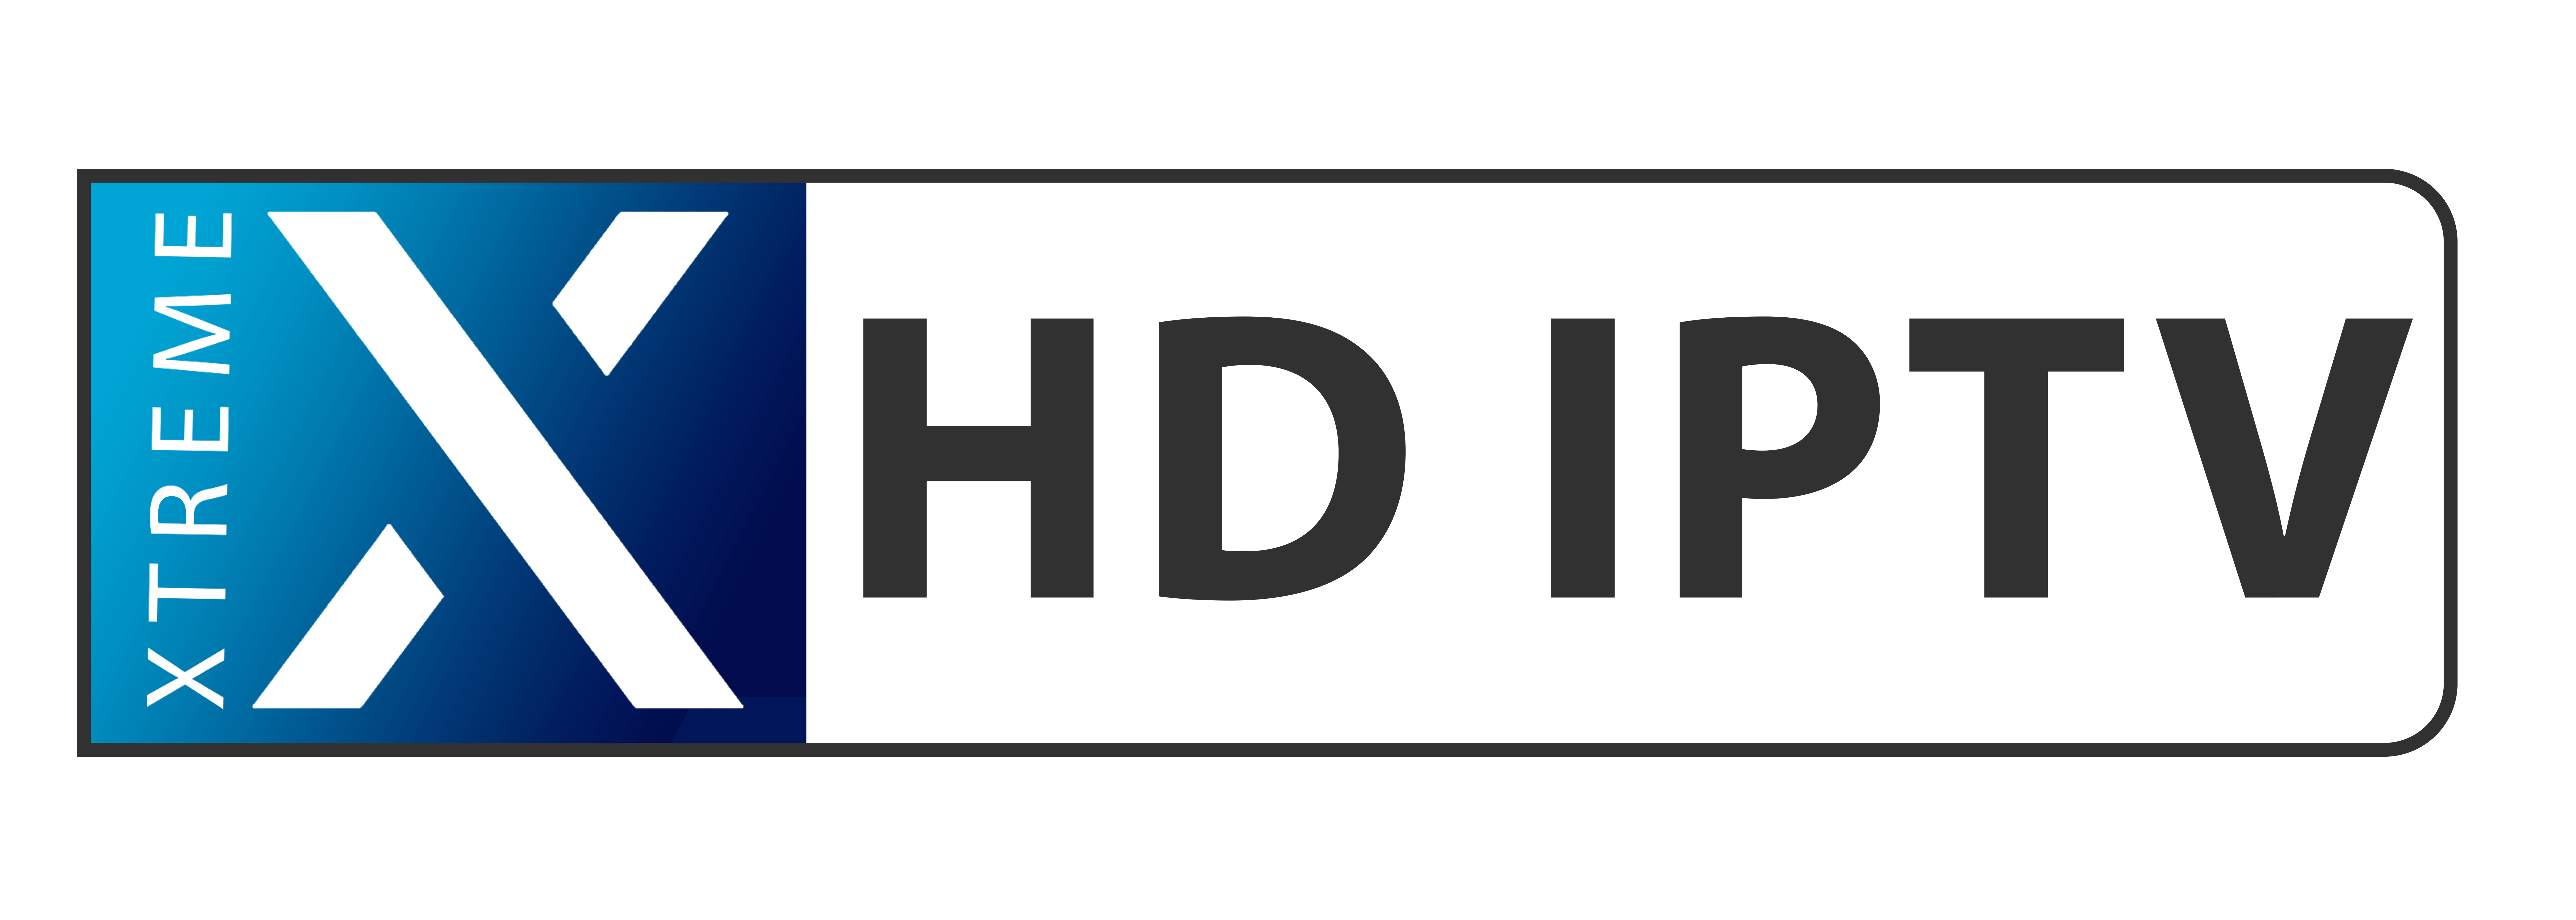 XtremeHD-IPTV-logo